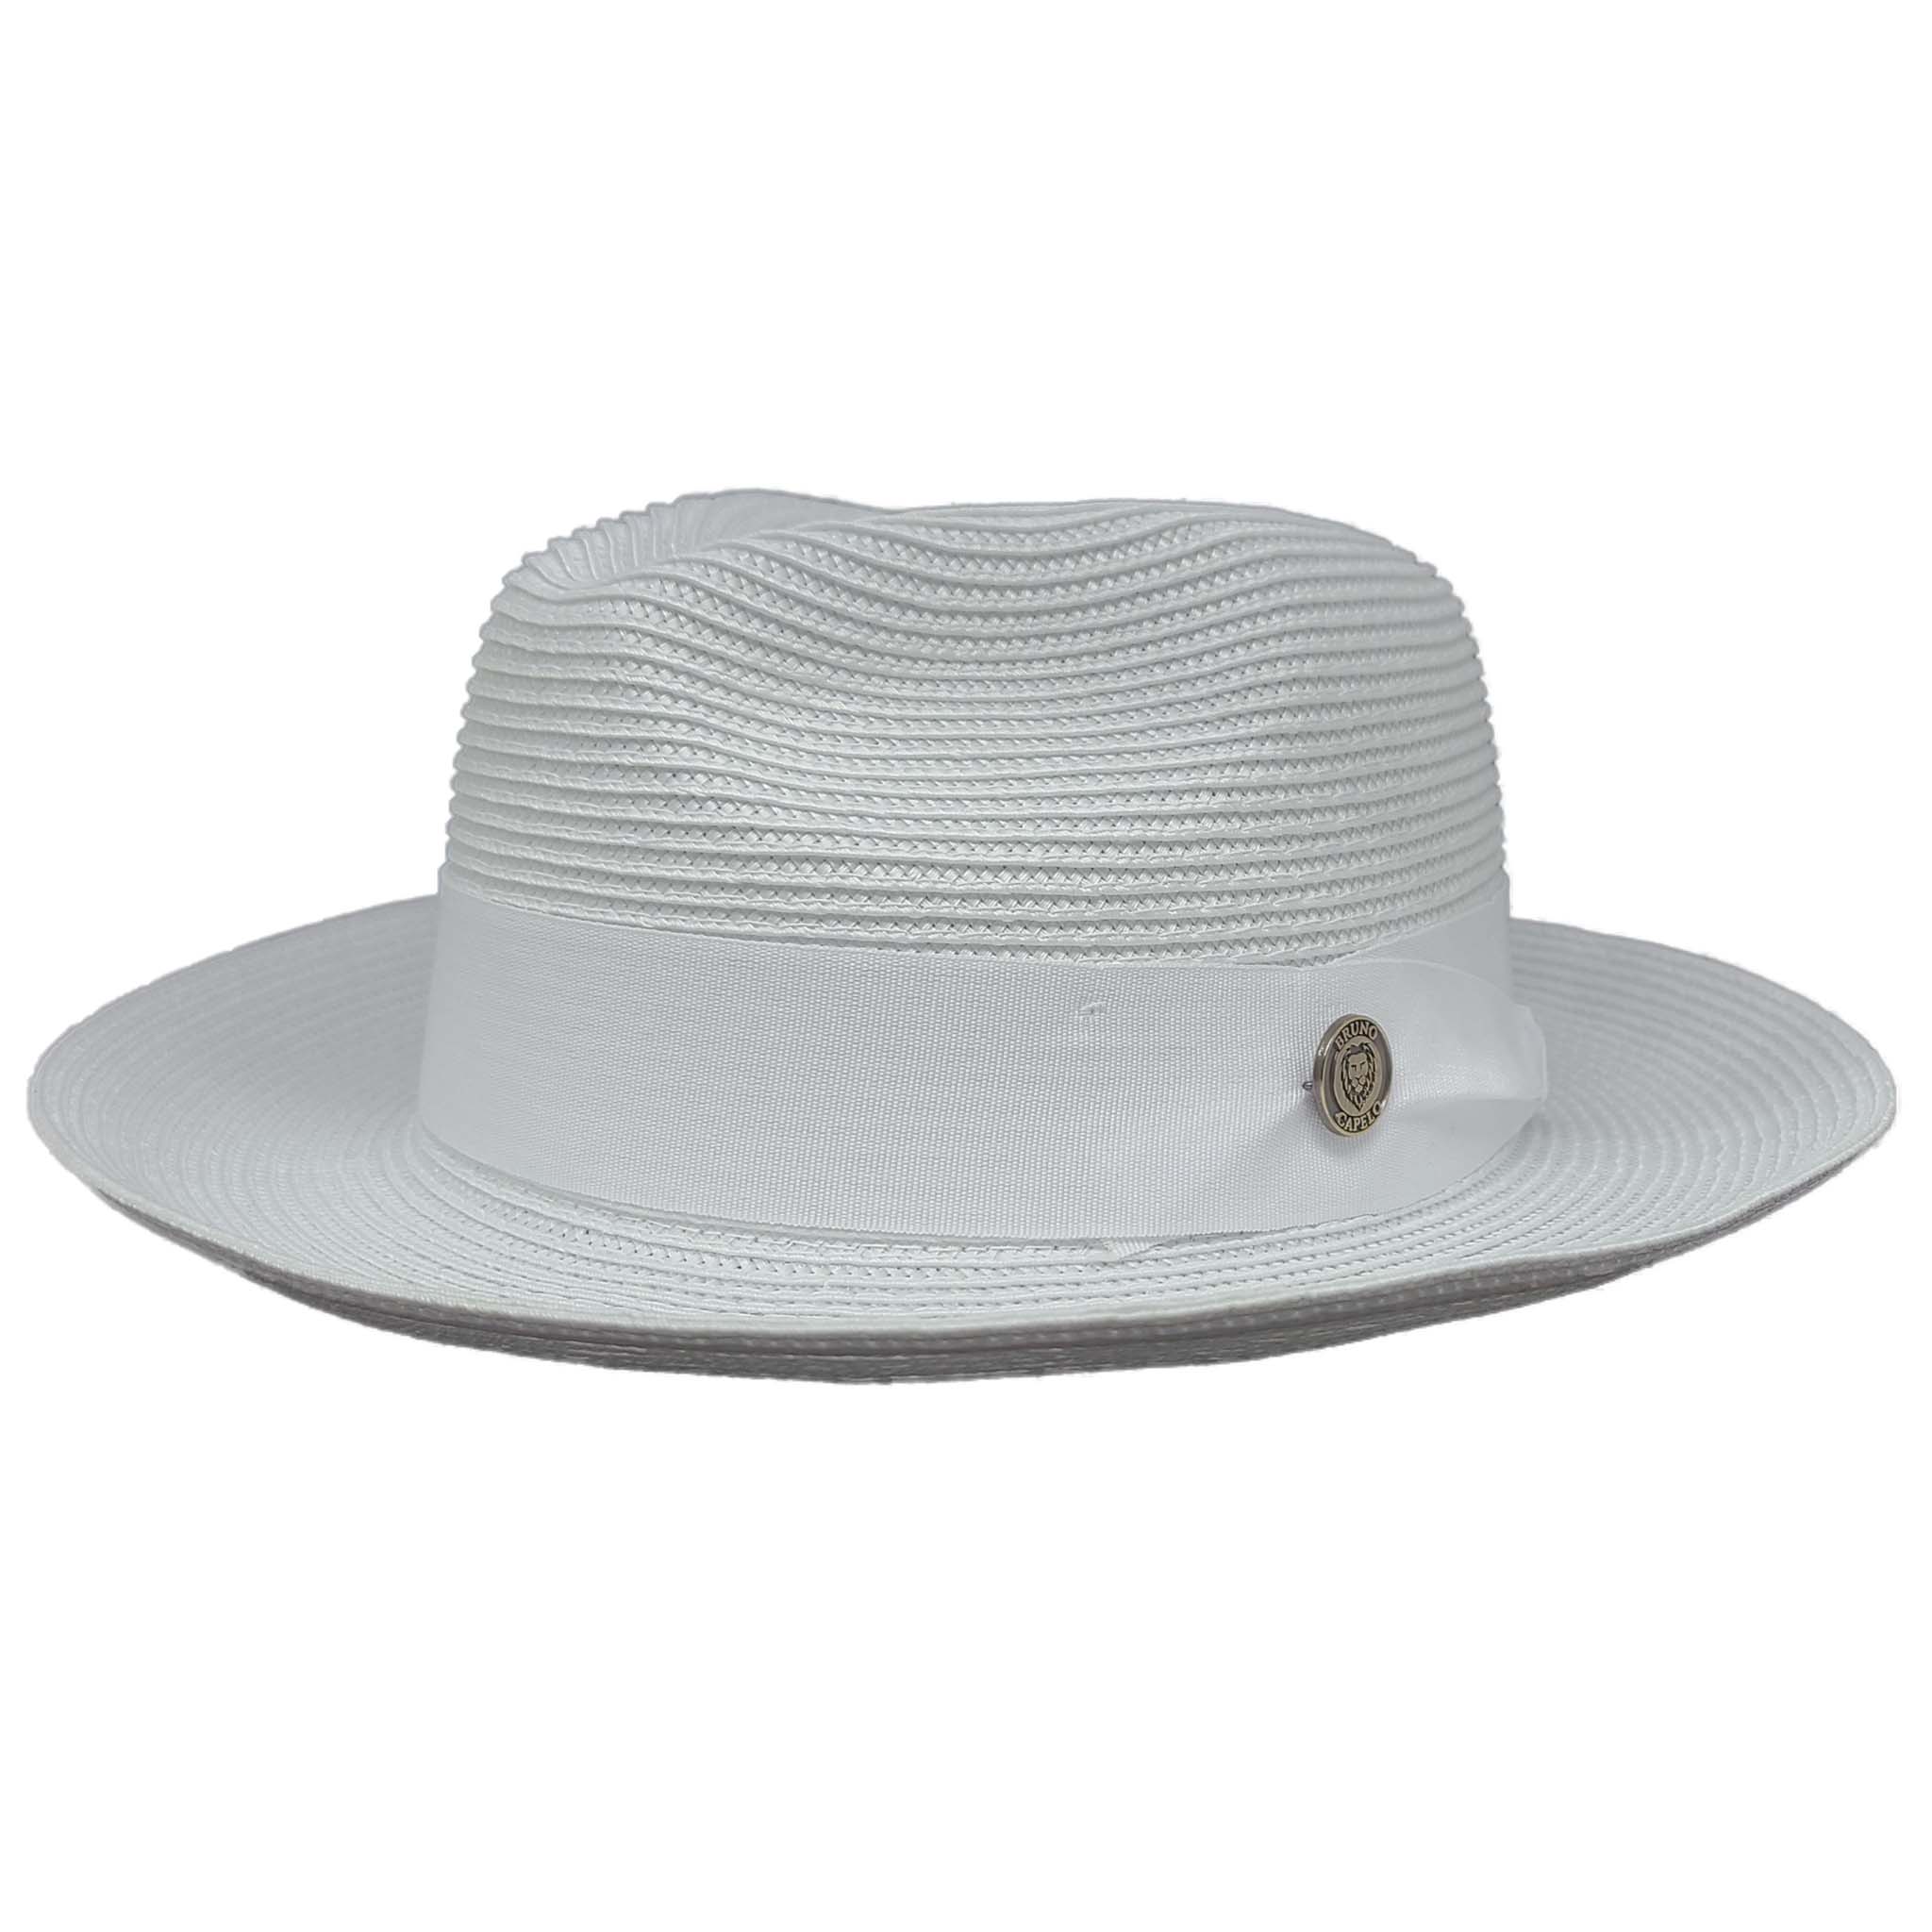 Classic White Fedora Hat For Men